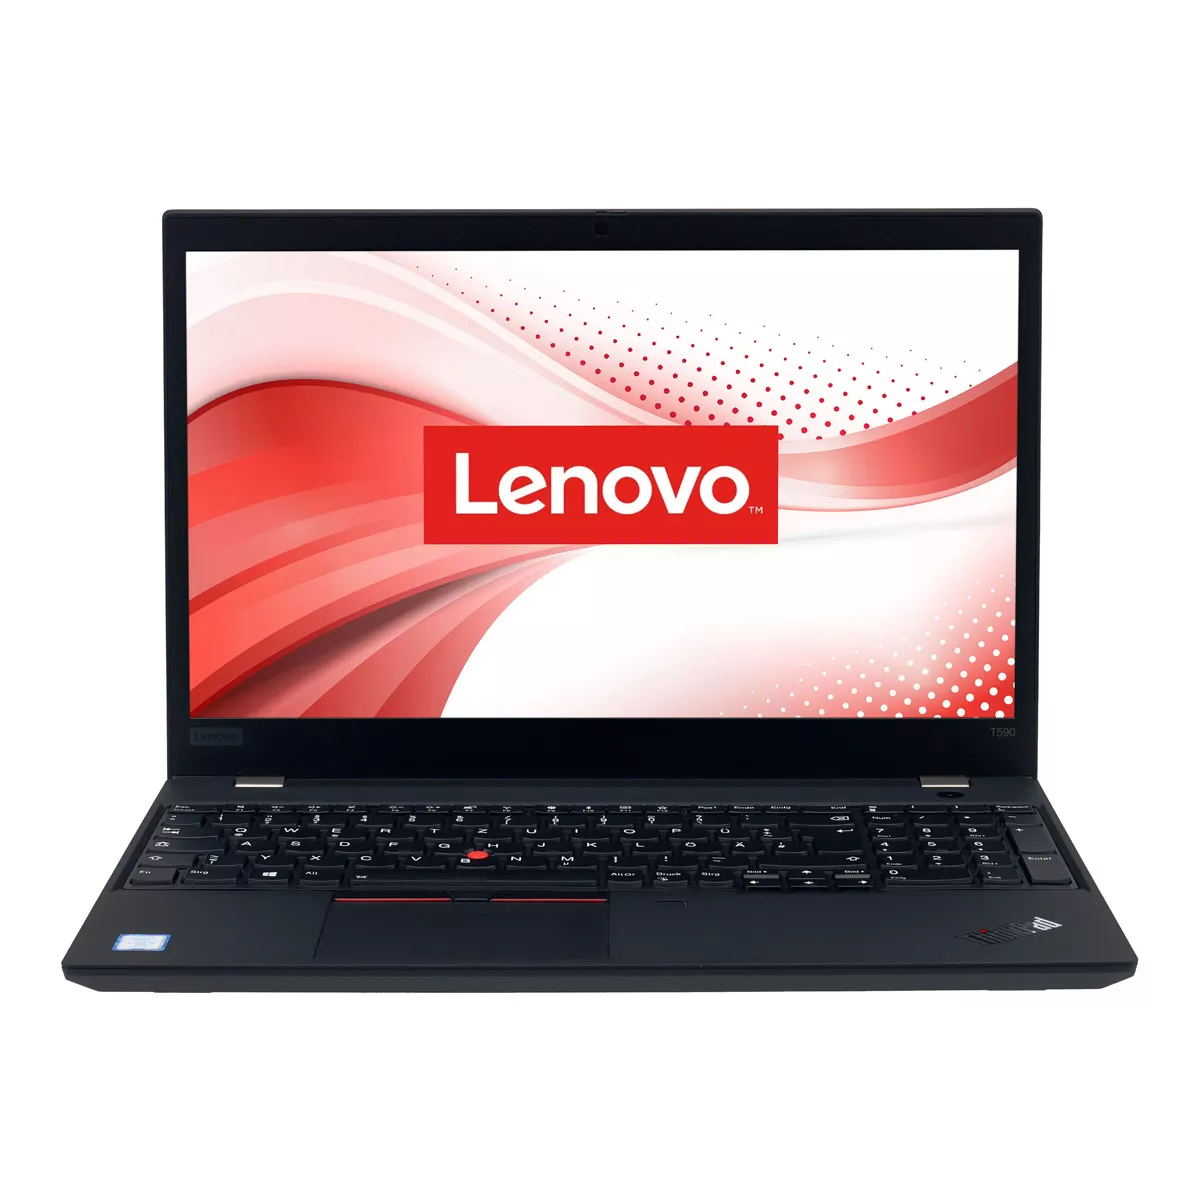 Lenovo ThinkPad T590 Core i7 8665U Full-HD Touch 16 GB 500 GB M.2 nVME SSD Webcam A